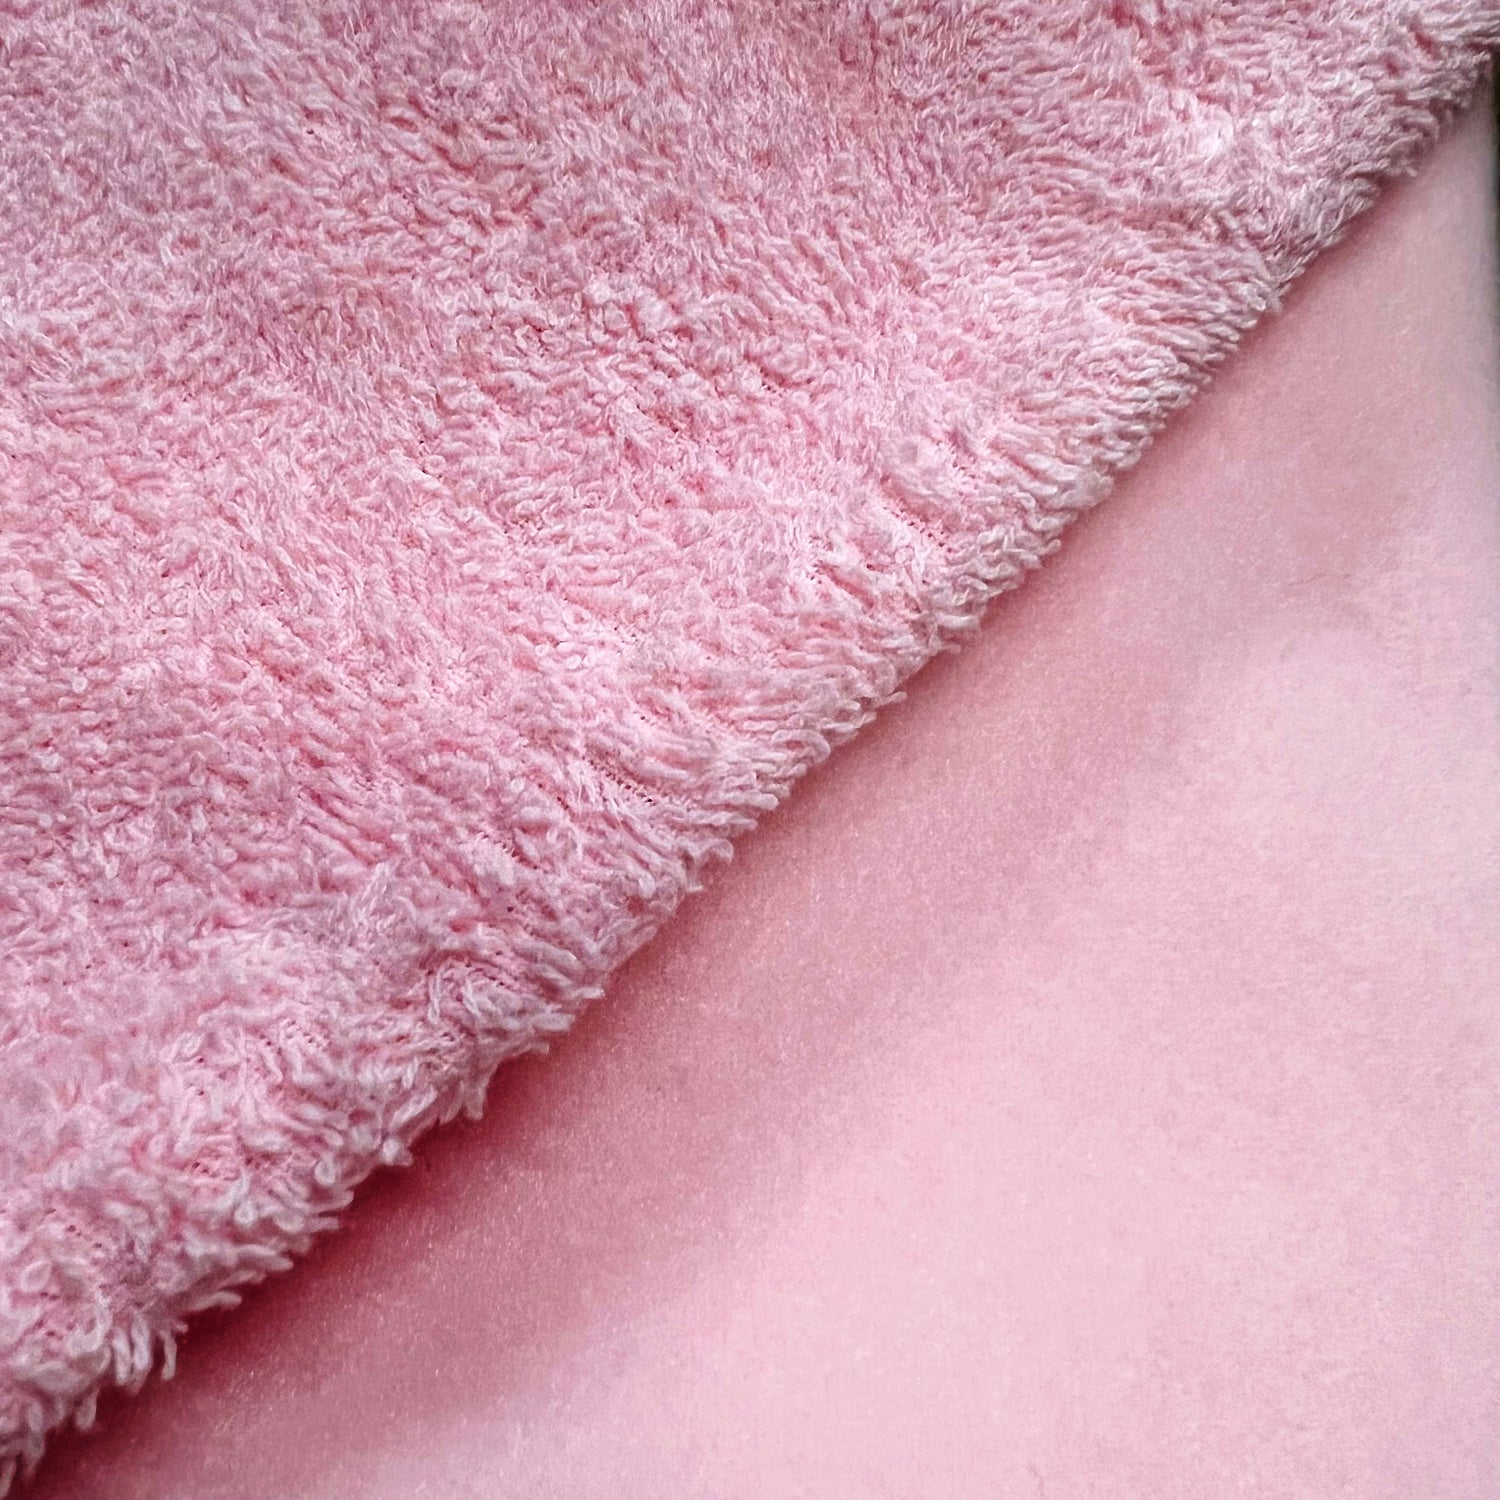 close up photo of burp cloth pink terry cloth and pink fleece